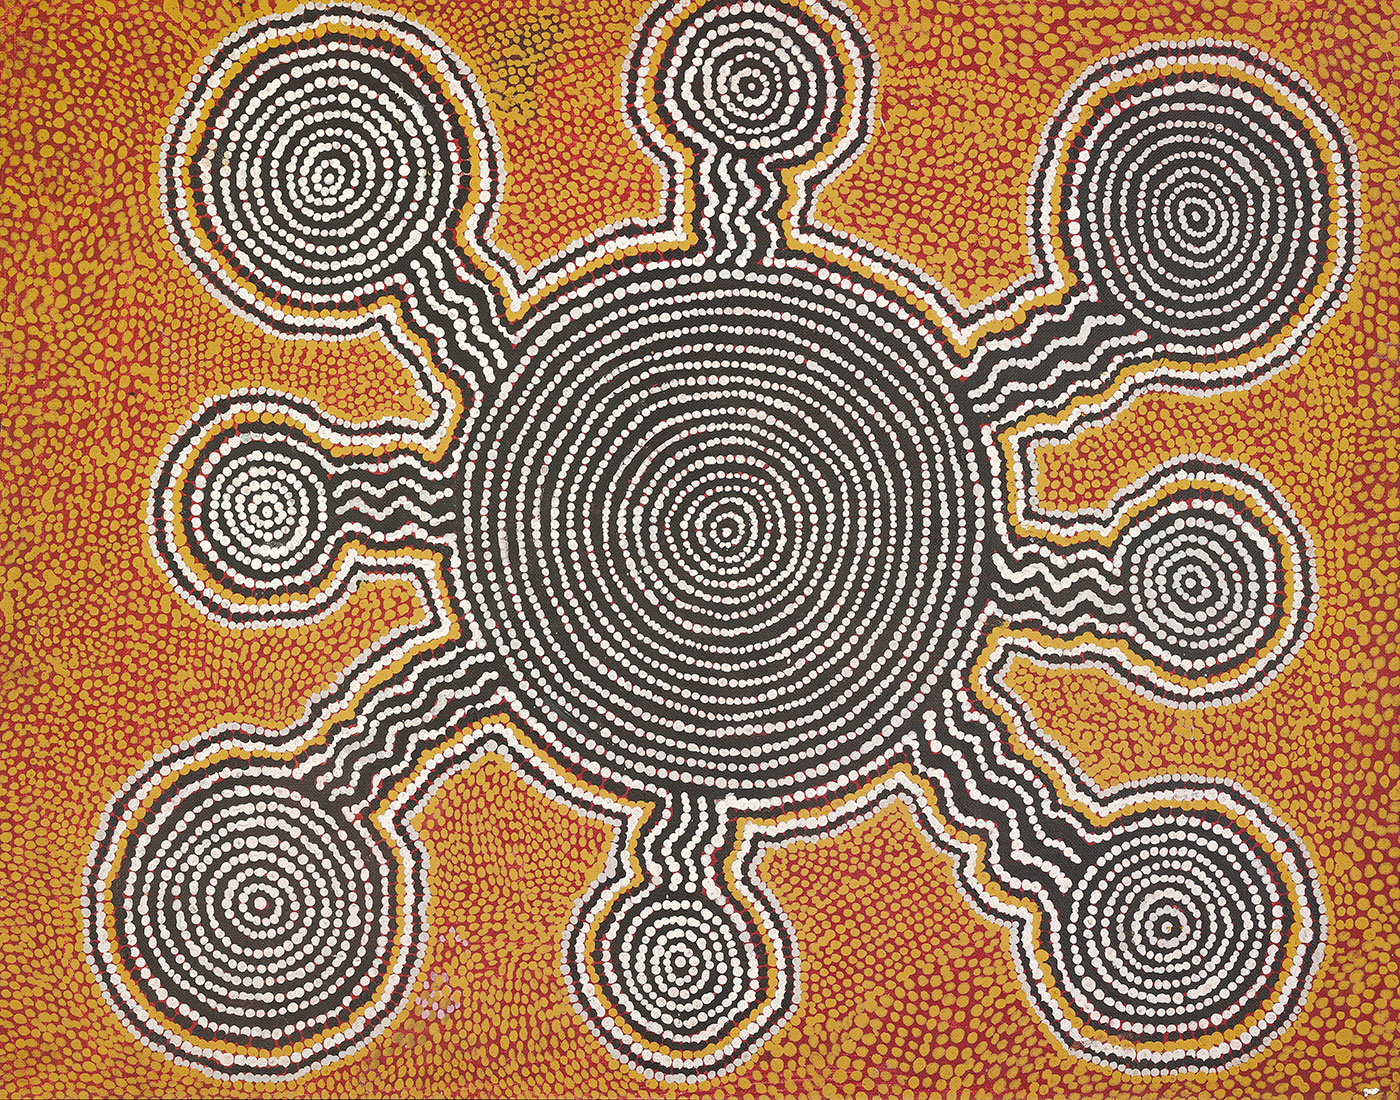 Aboriginal painting.